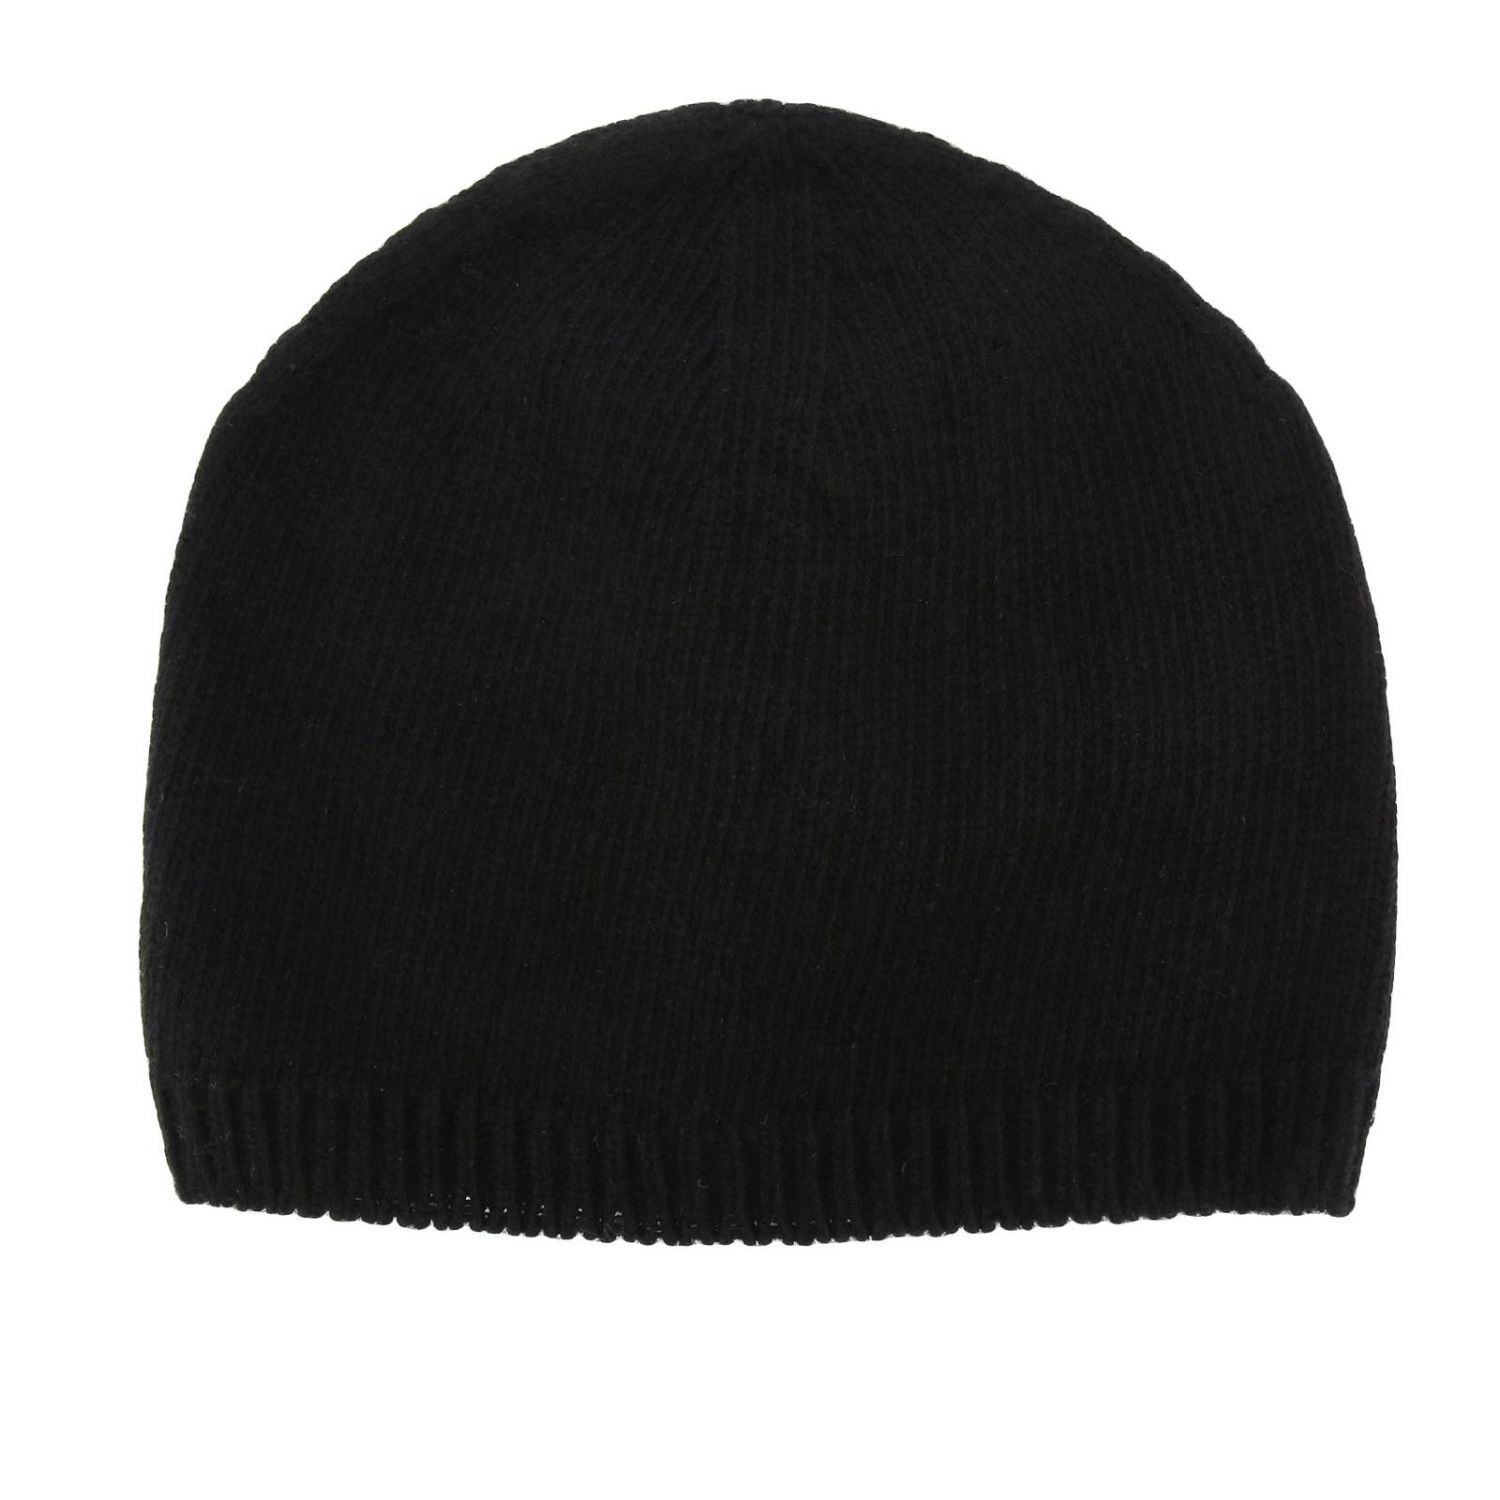 Emporio Armani Outlet: Hat men | Hat Emporio Armani Men Black | Hat ...